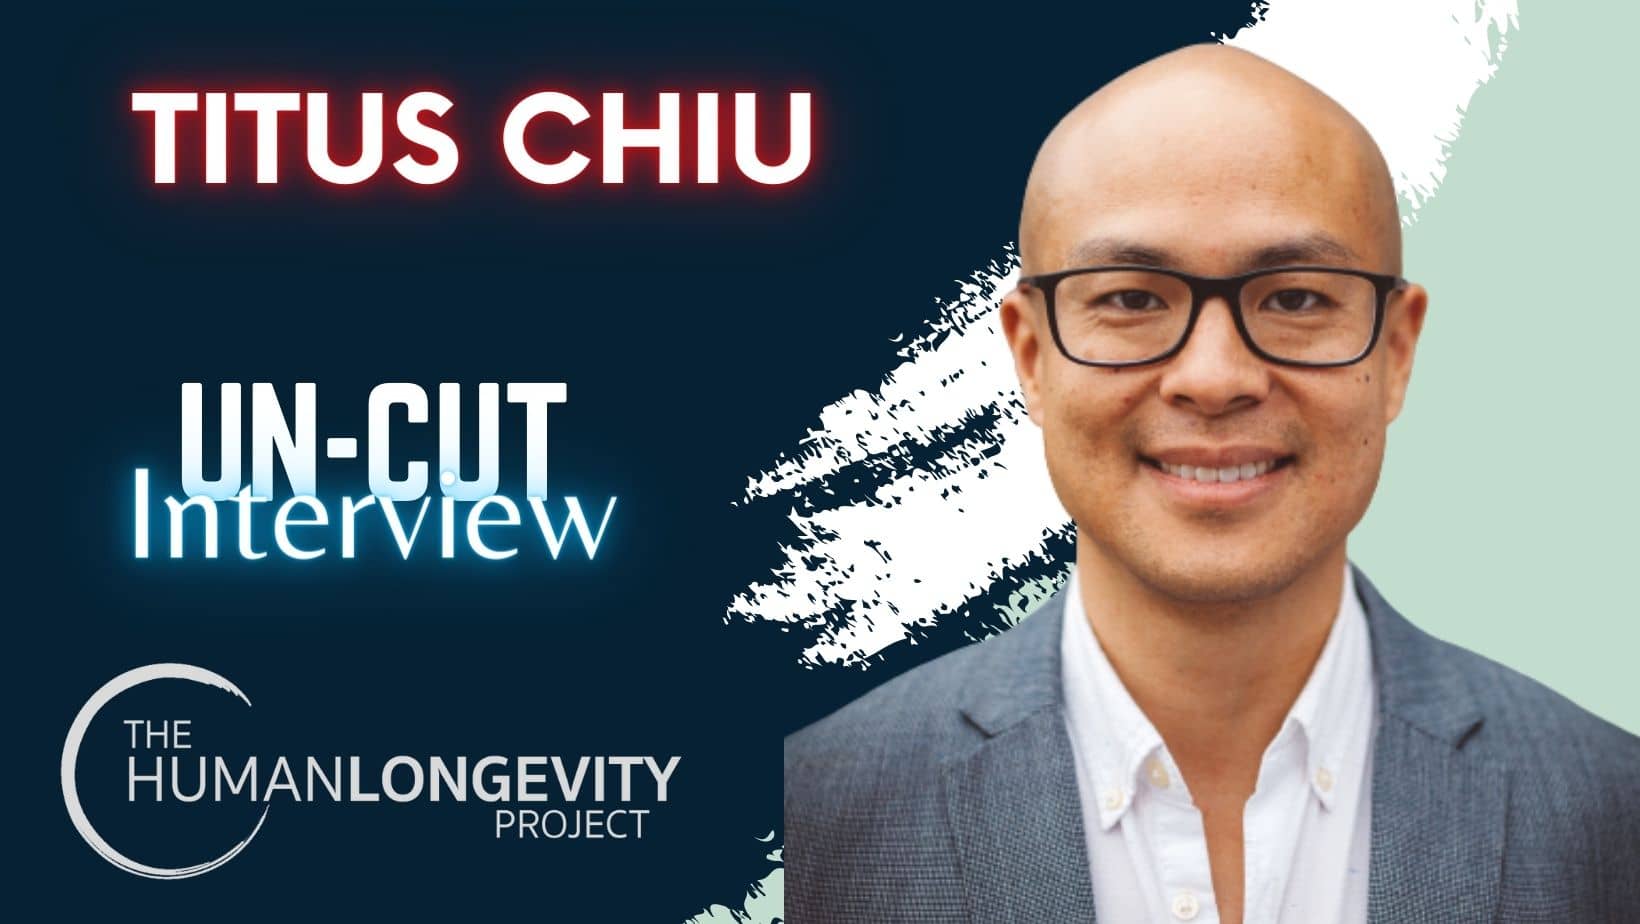 Human Longevity Project Uncut Interview With Dr. Titus Chiu